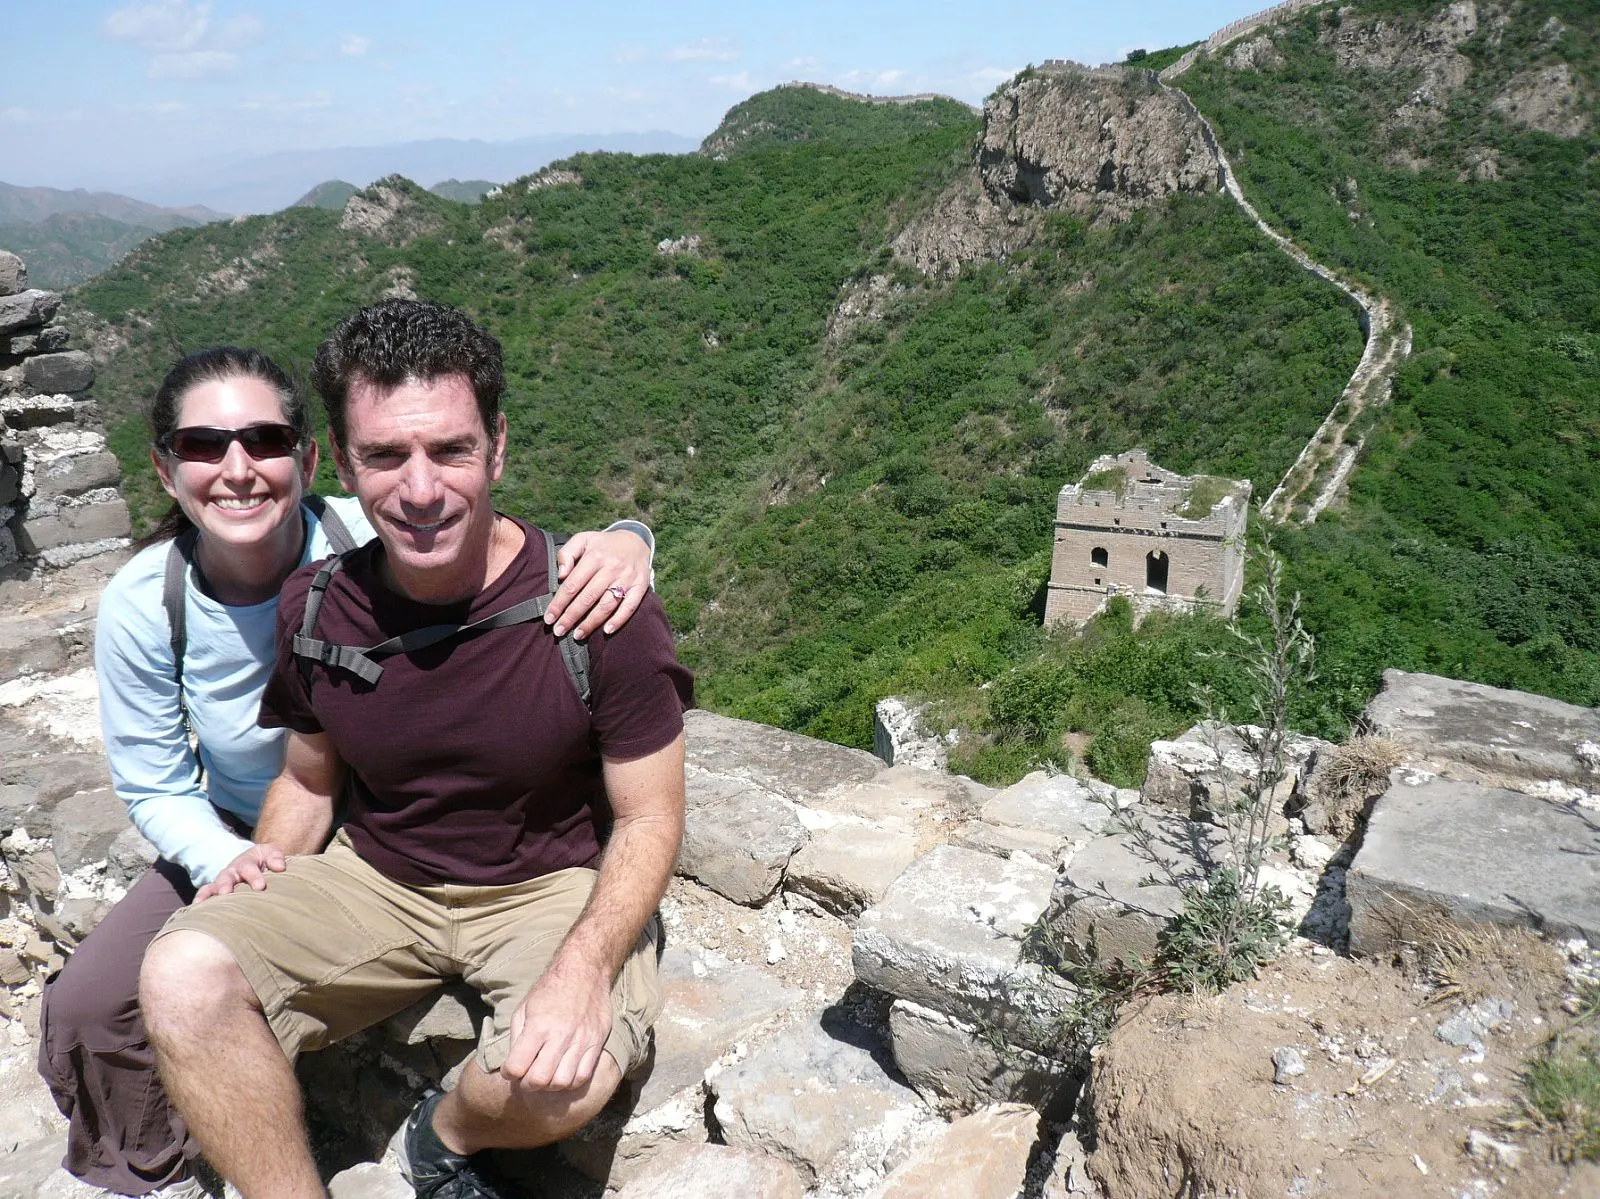 Lisa and George at the Great Wall of China.